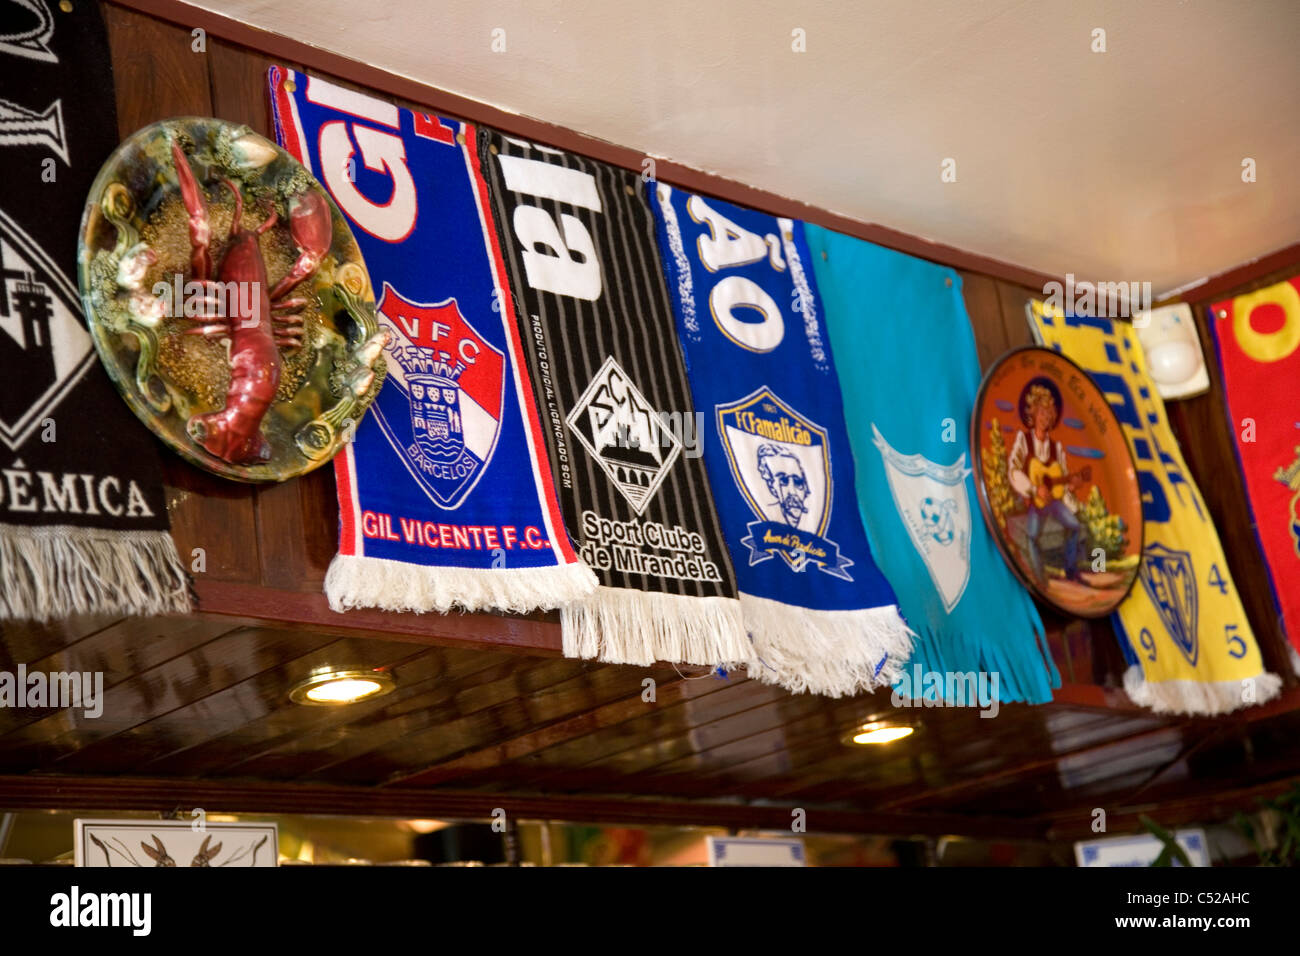 Portuguese Football Scarves above Bar Counter Stock Photo